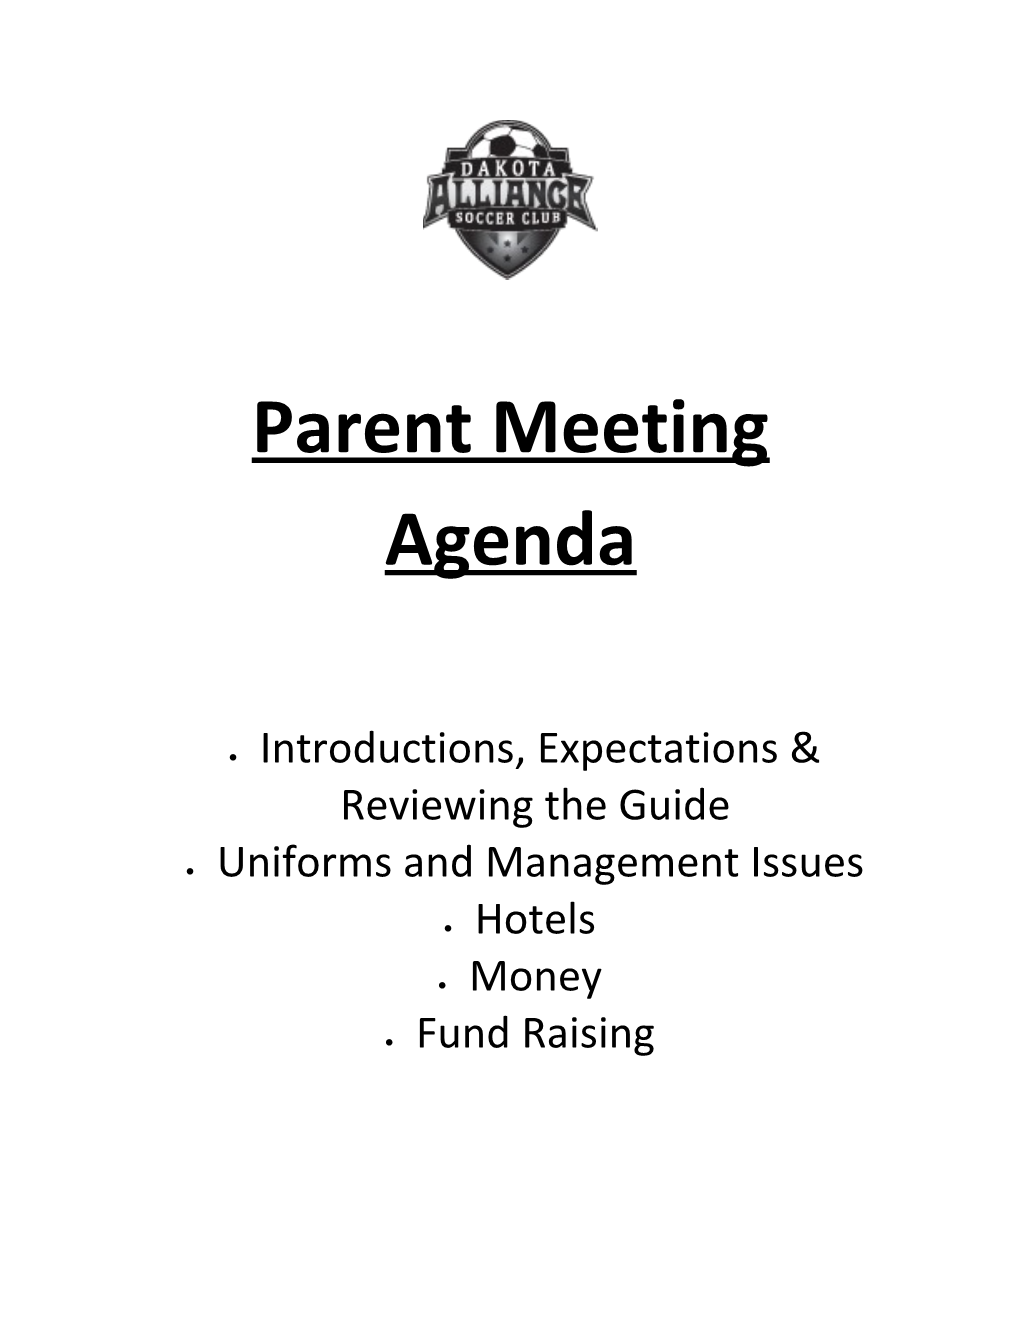 Parent Meetingagenda